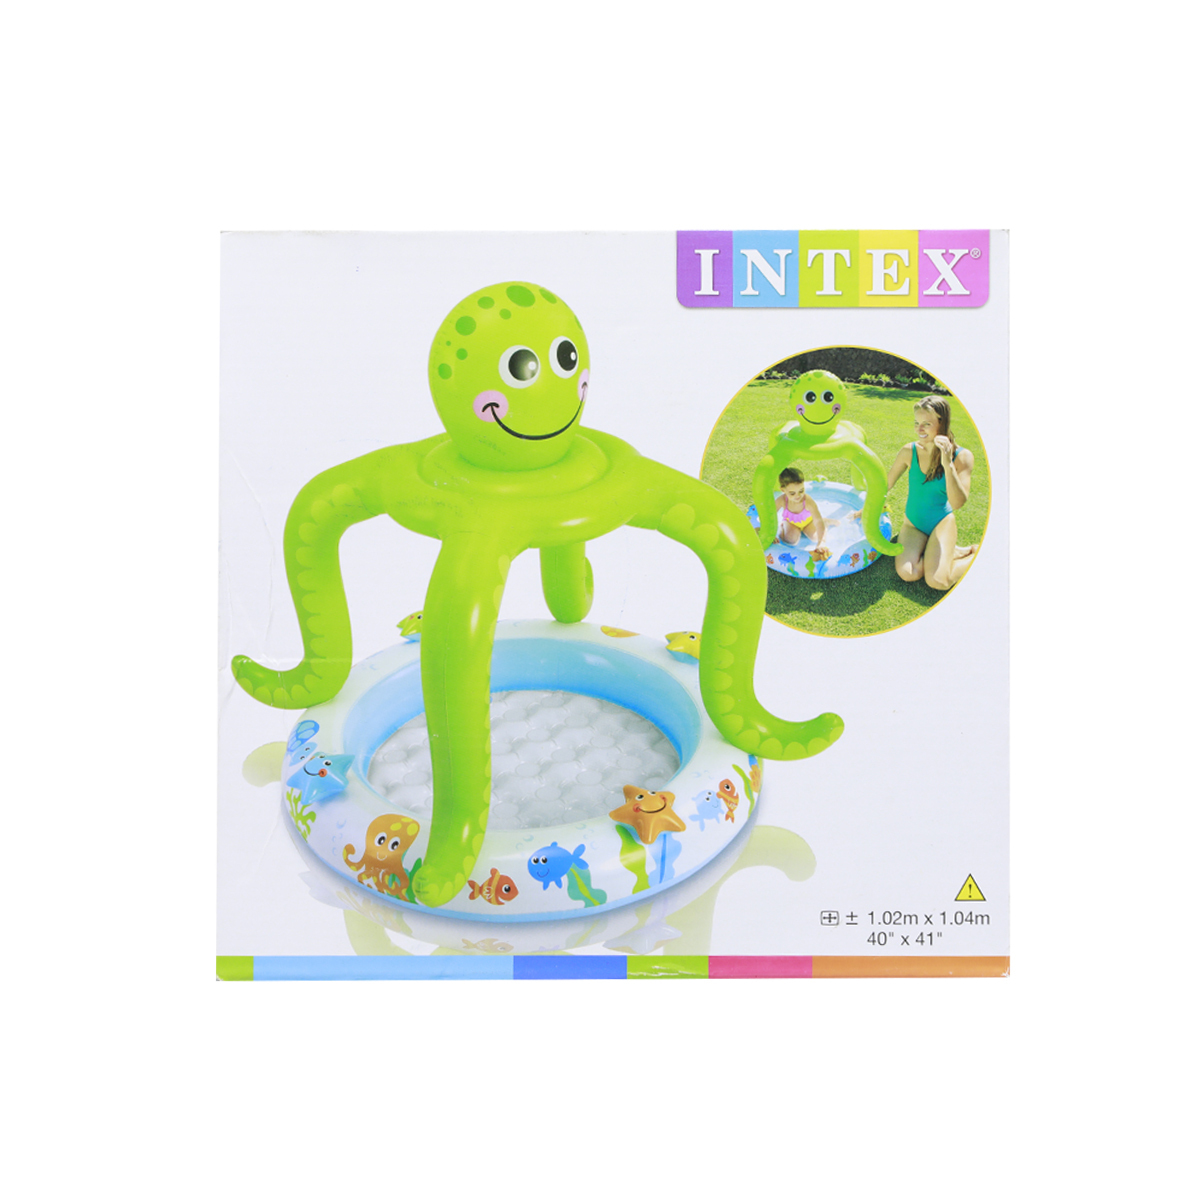 Intex Baby Pool Smiling 57115